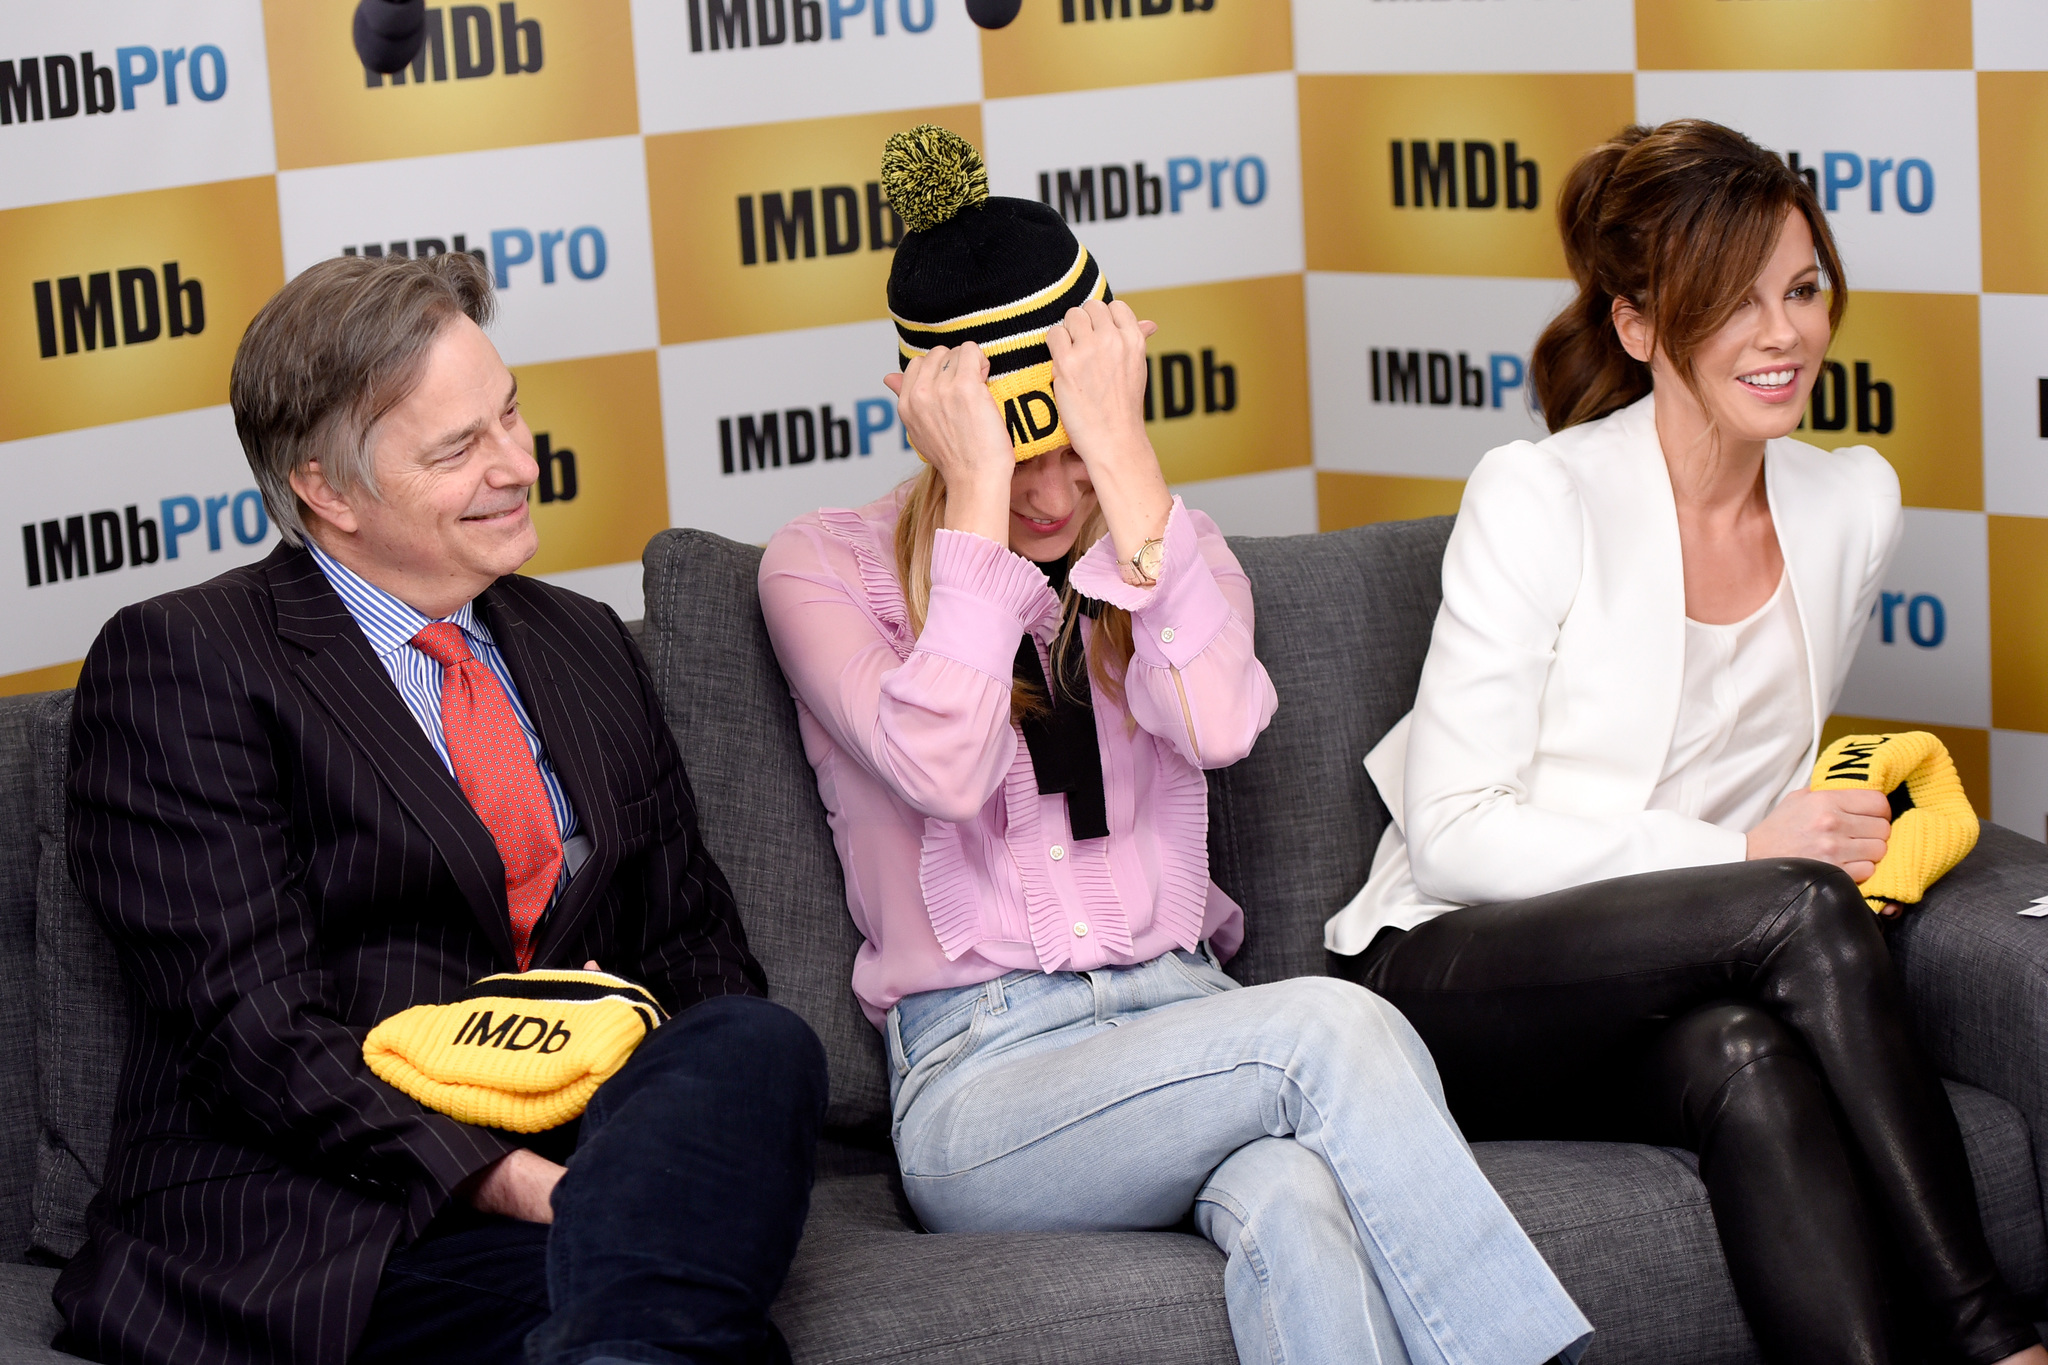 Kate Beckinsale, Chloë Sevigny and Whit Stillman at event of The IMDb Studio (2015)